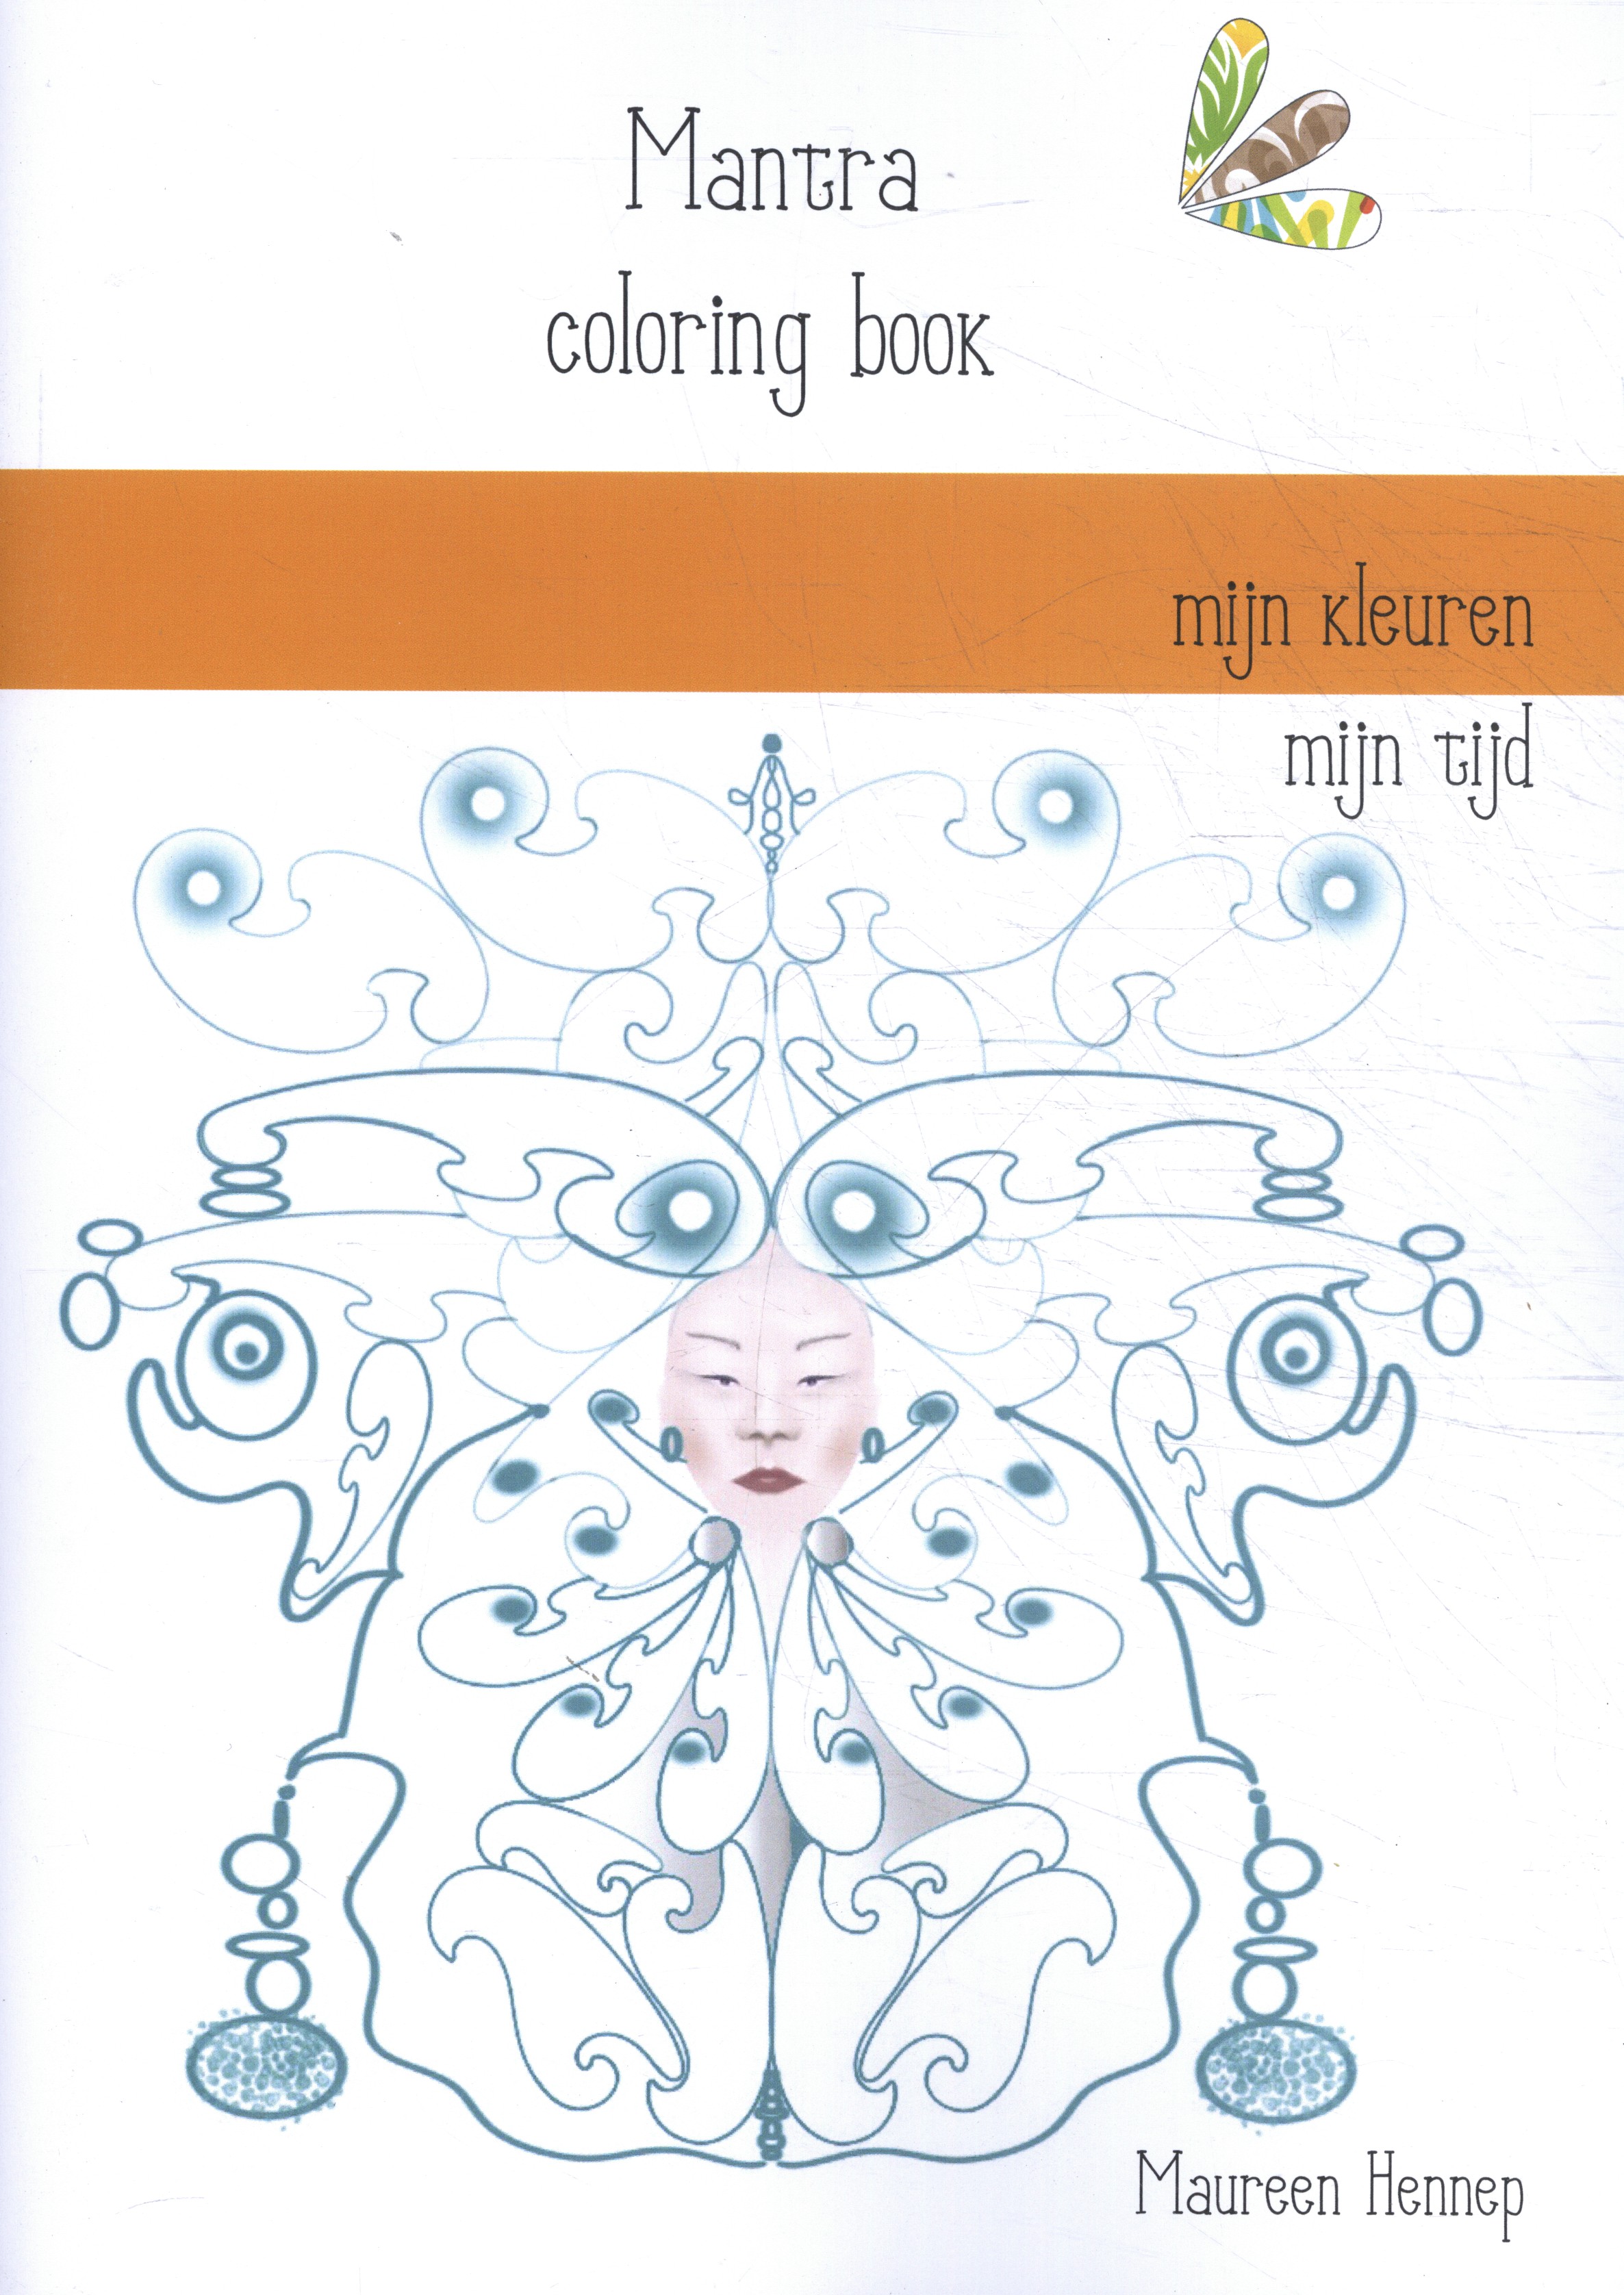 Mantra Coloring book A4